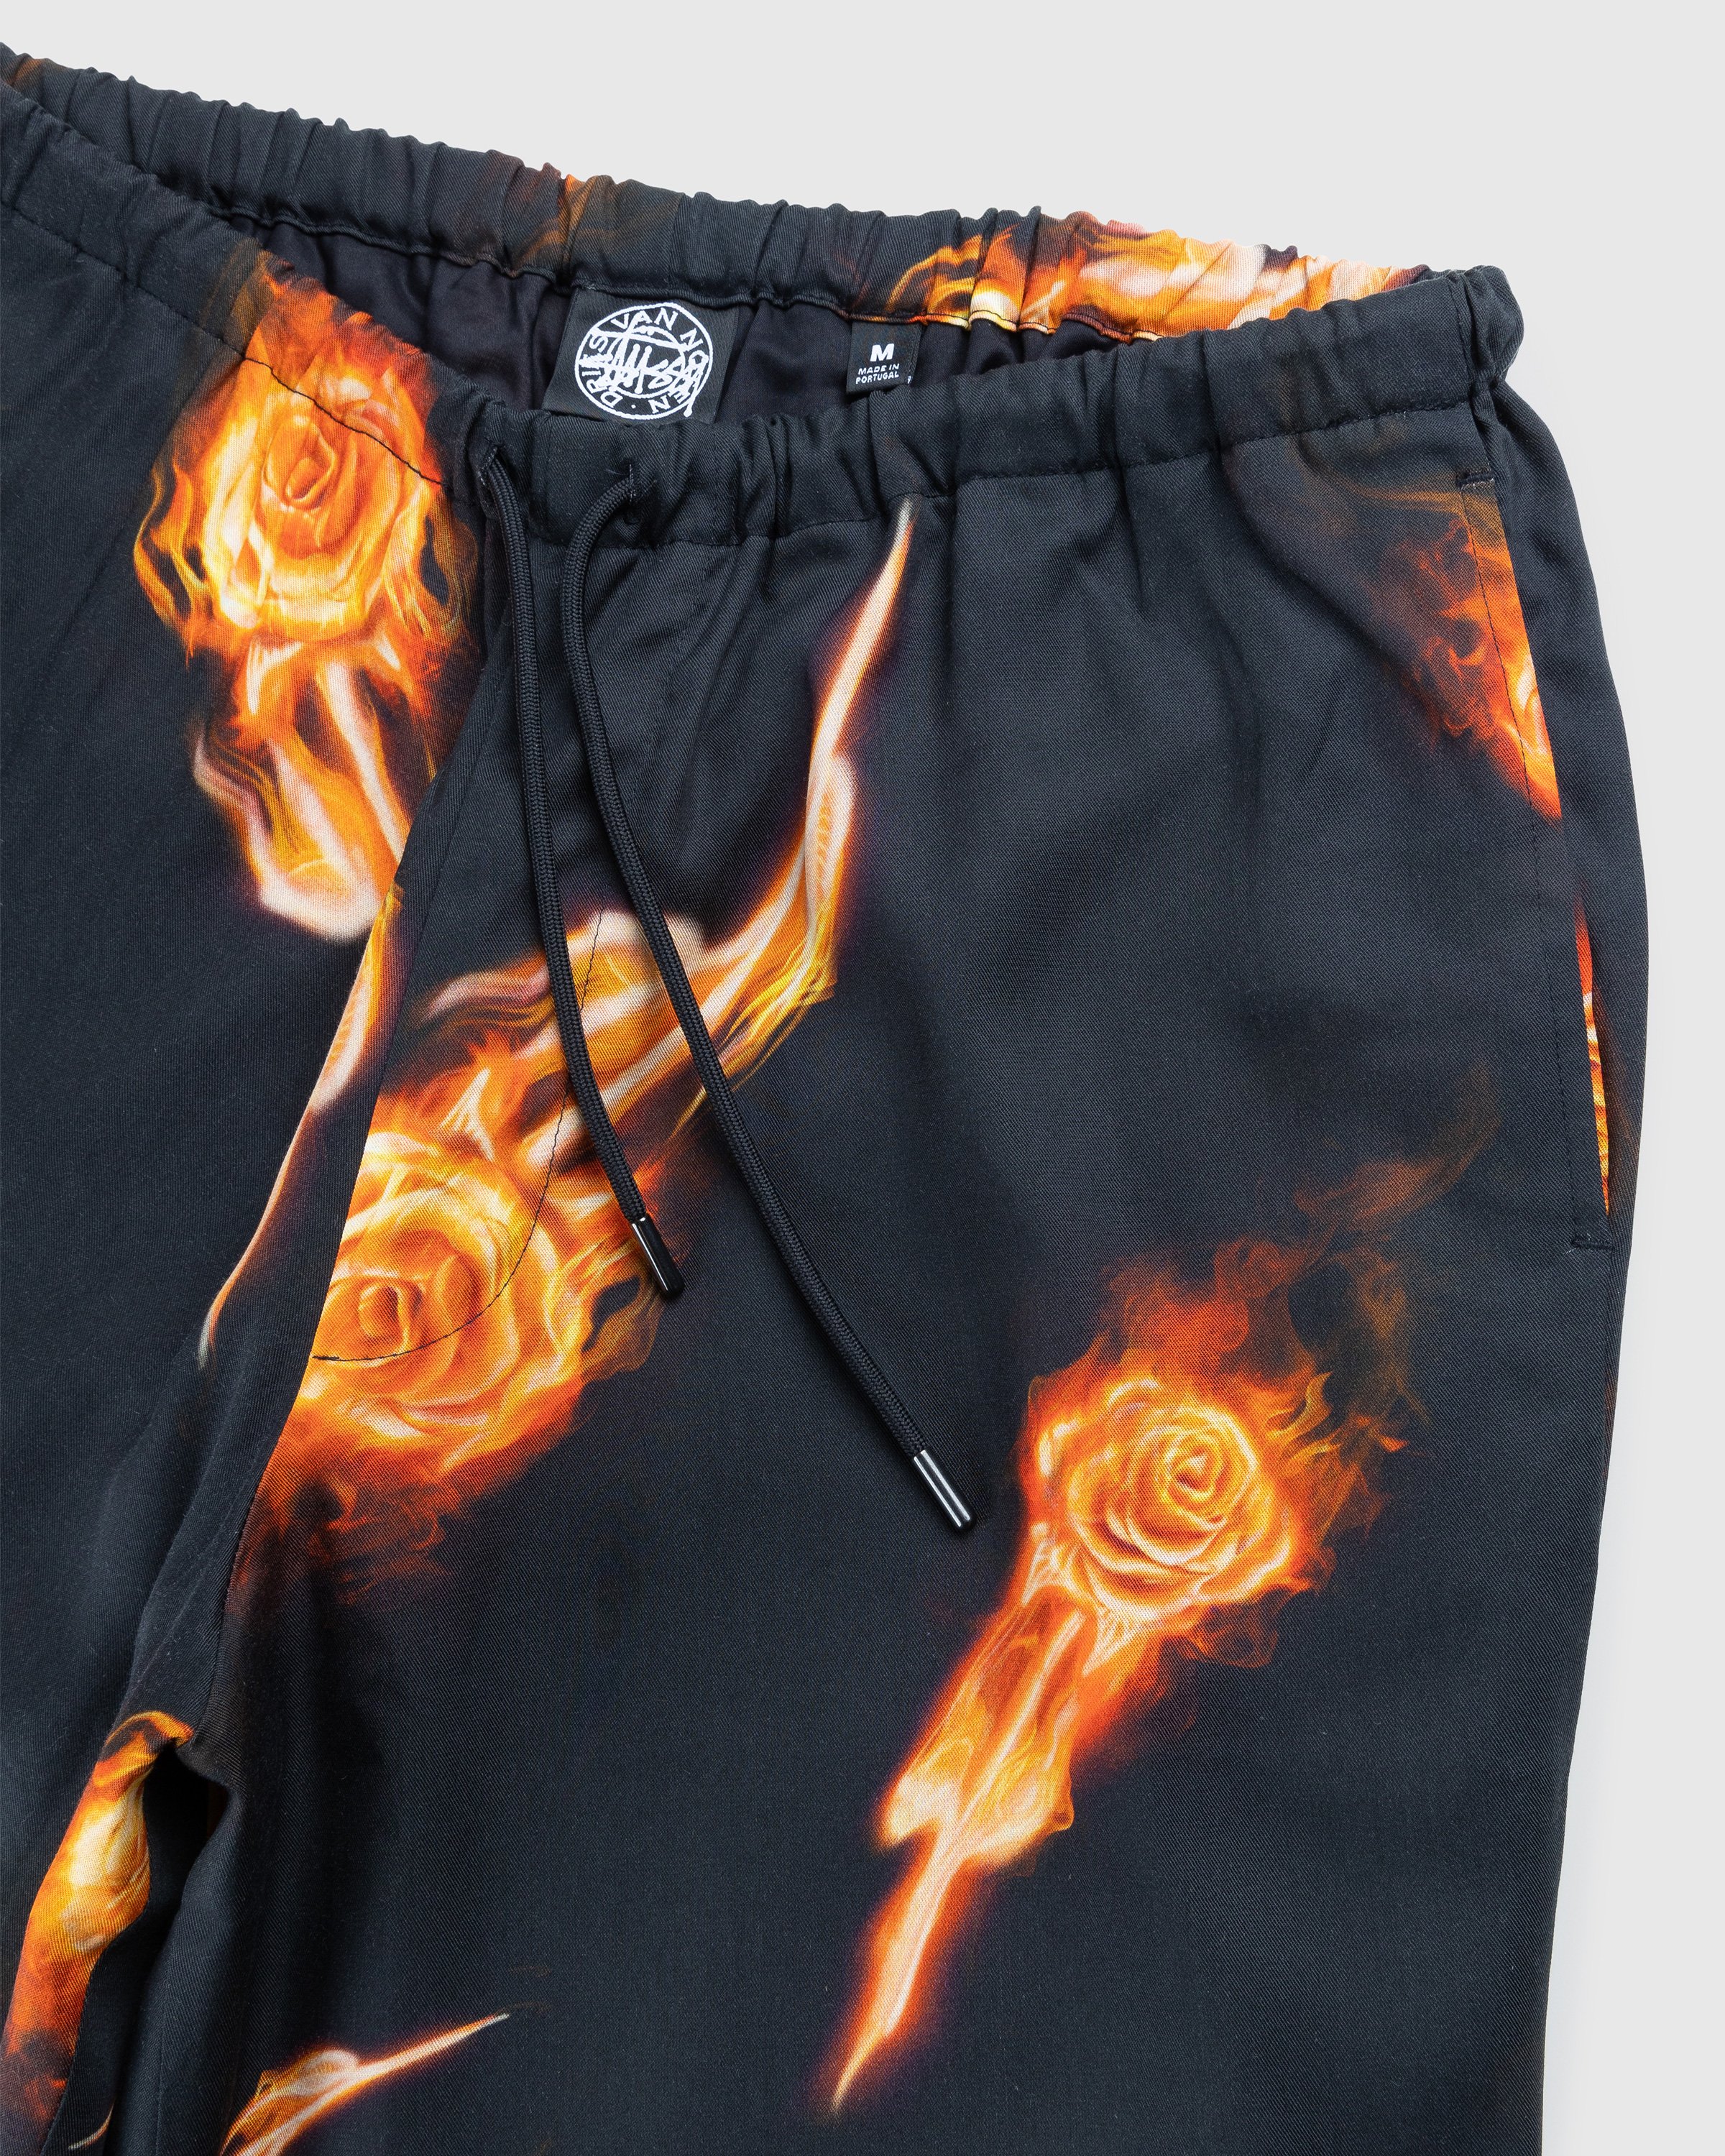 Stüssy x Dries van Noten - Flame Rose Short - Clothing - Black - Image 3